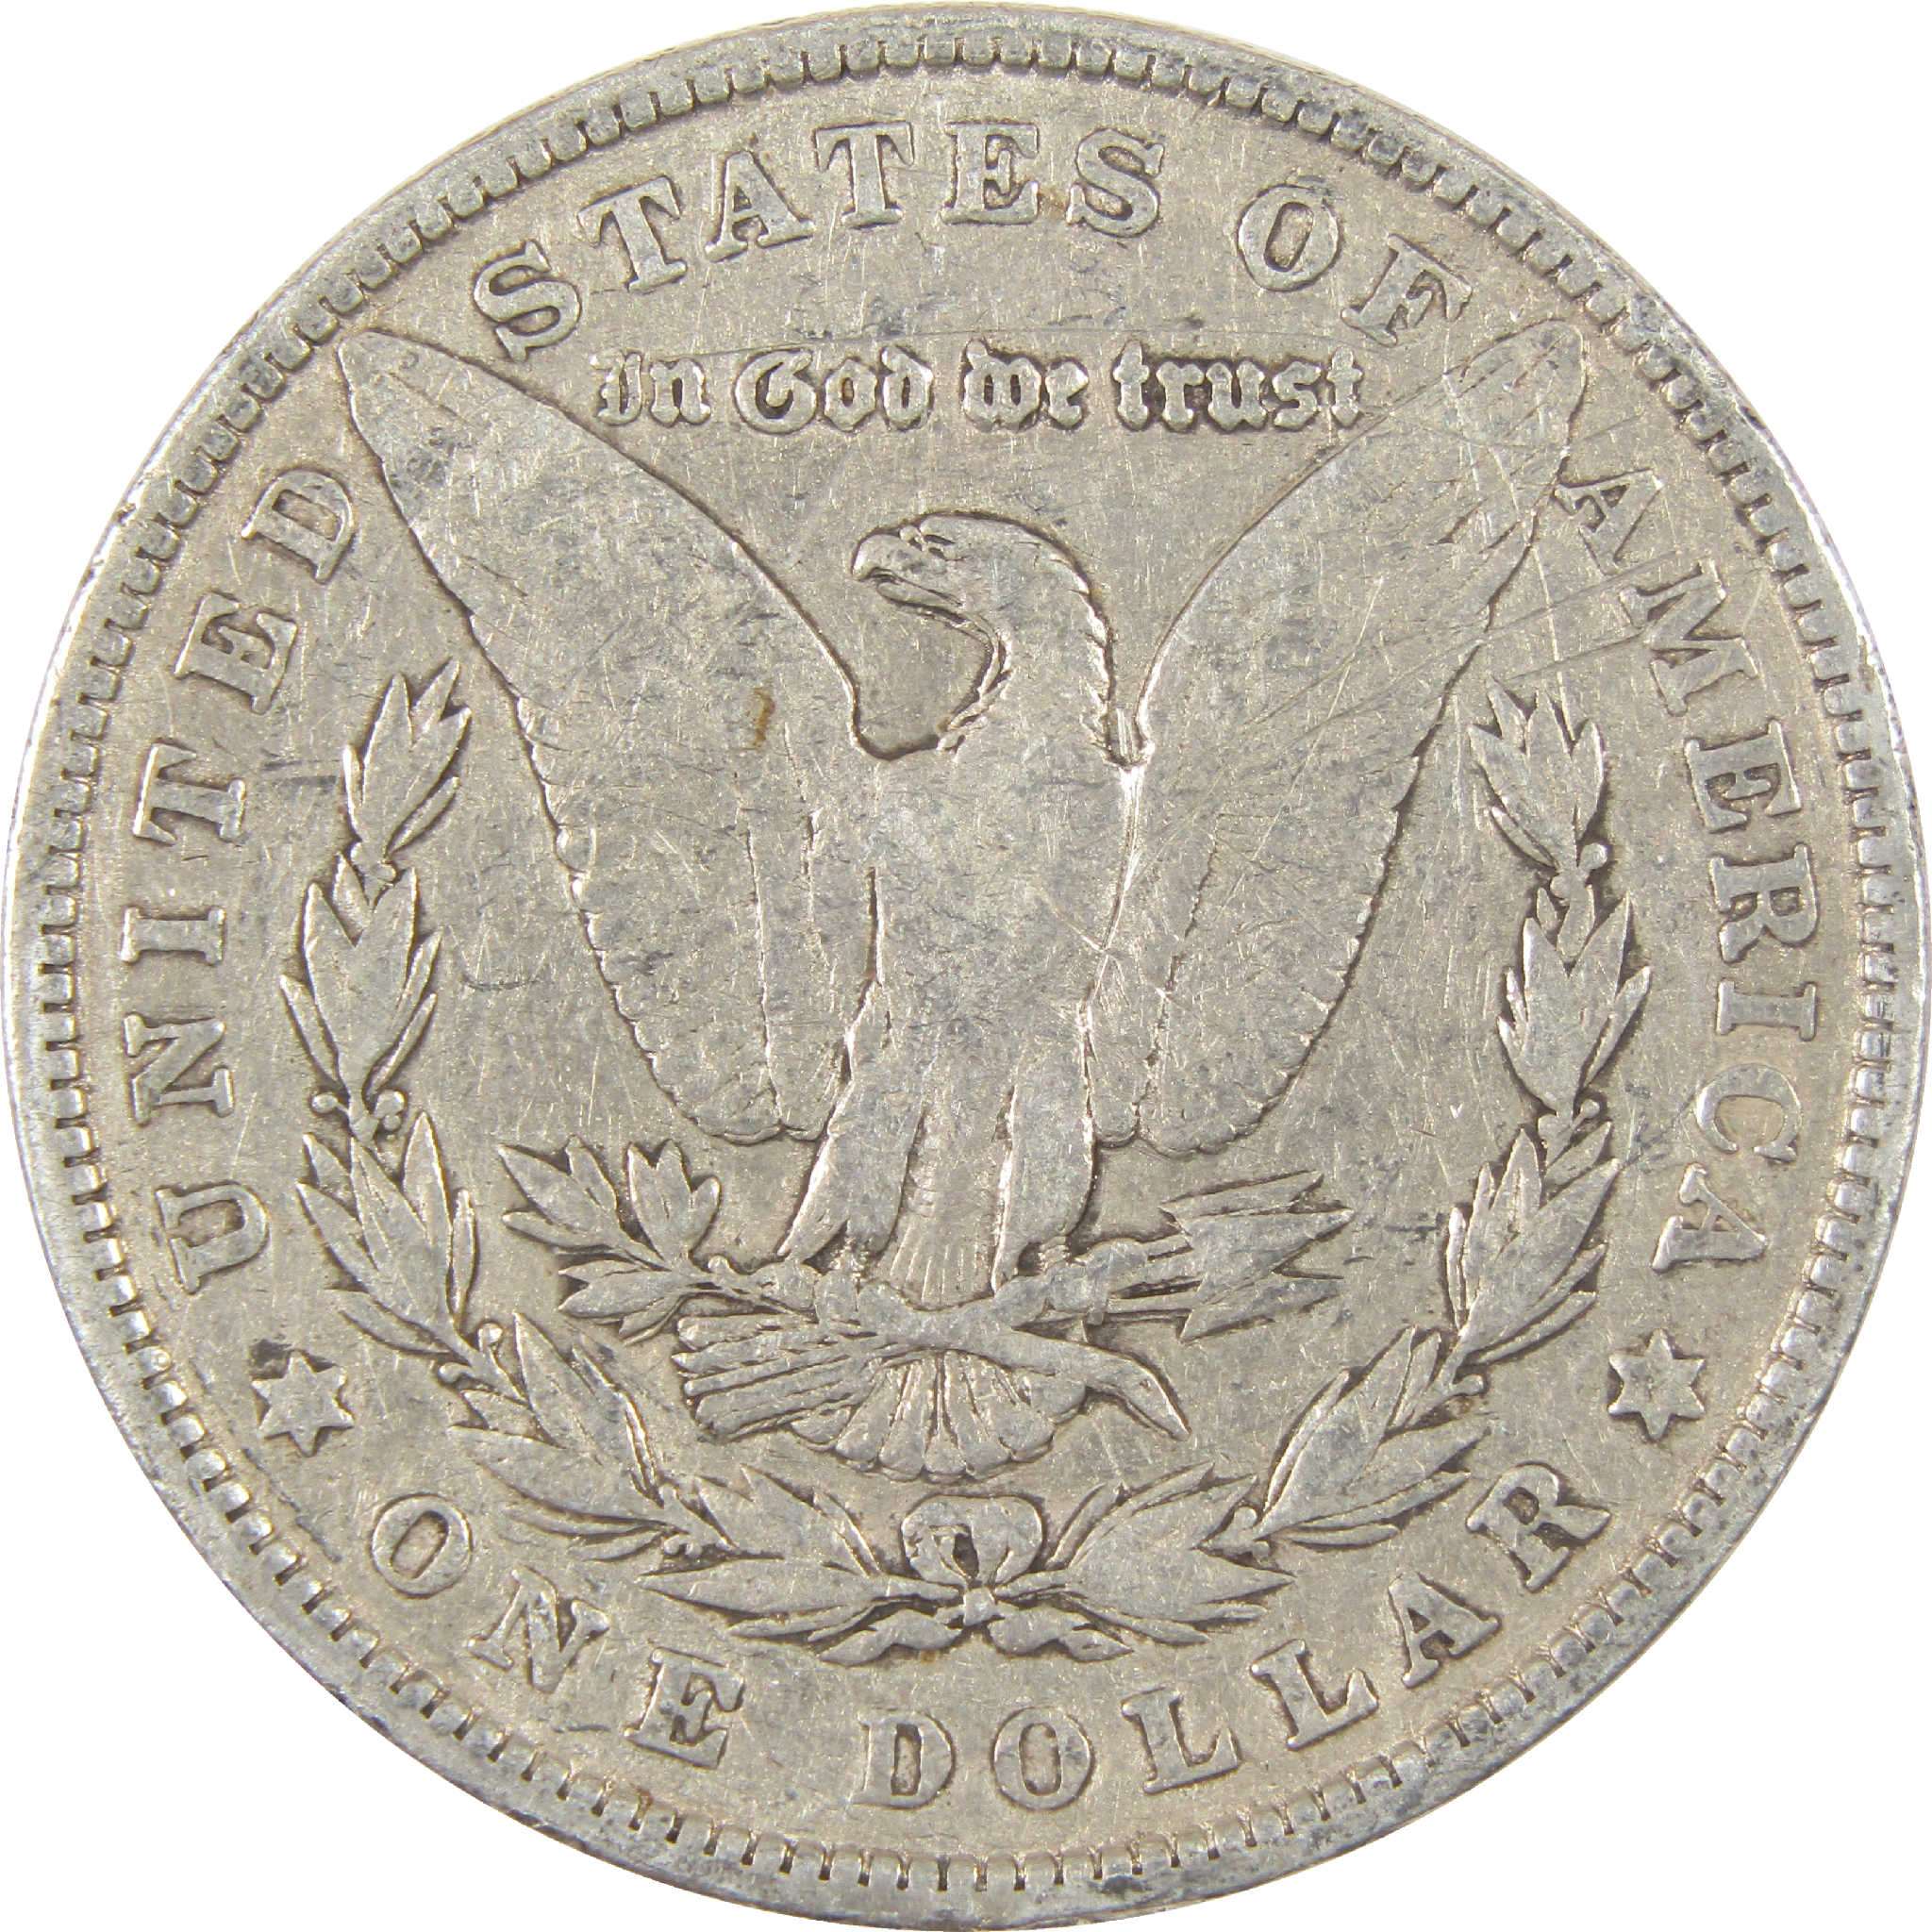 1901 DDR Double Die Reverse Morgan Dollar F Details Silver SKU:I11264 - Morgan coin - Morgan silver dollar - Morgan silver dollar for sale - Profile Coins &amp; Collectibles